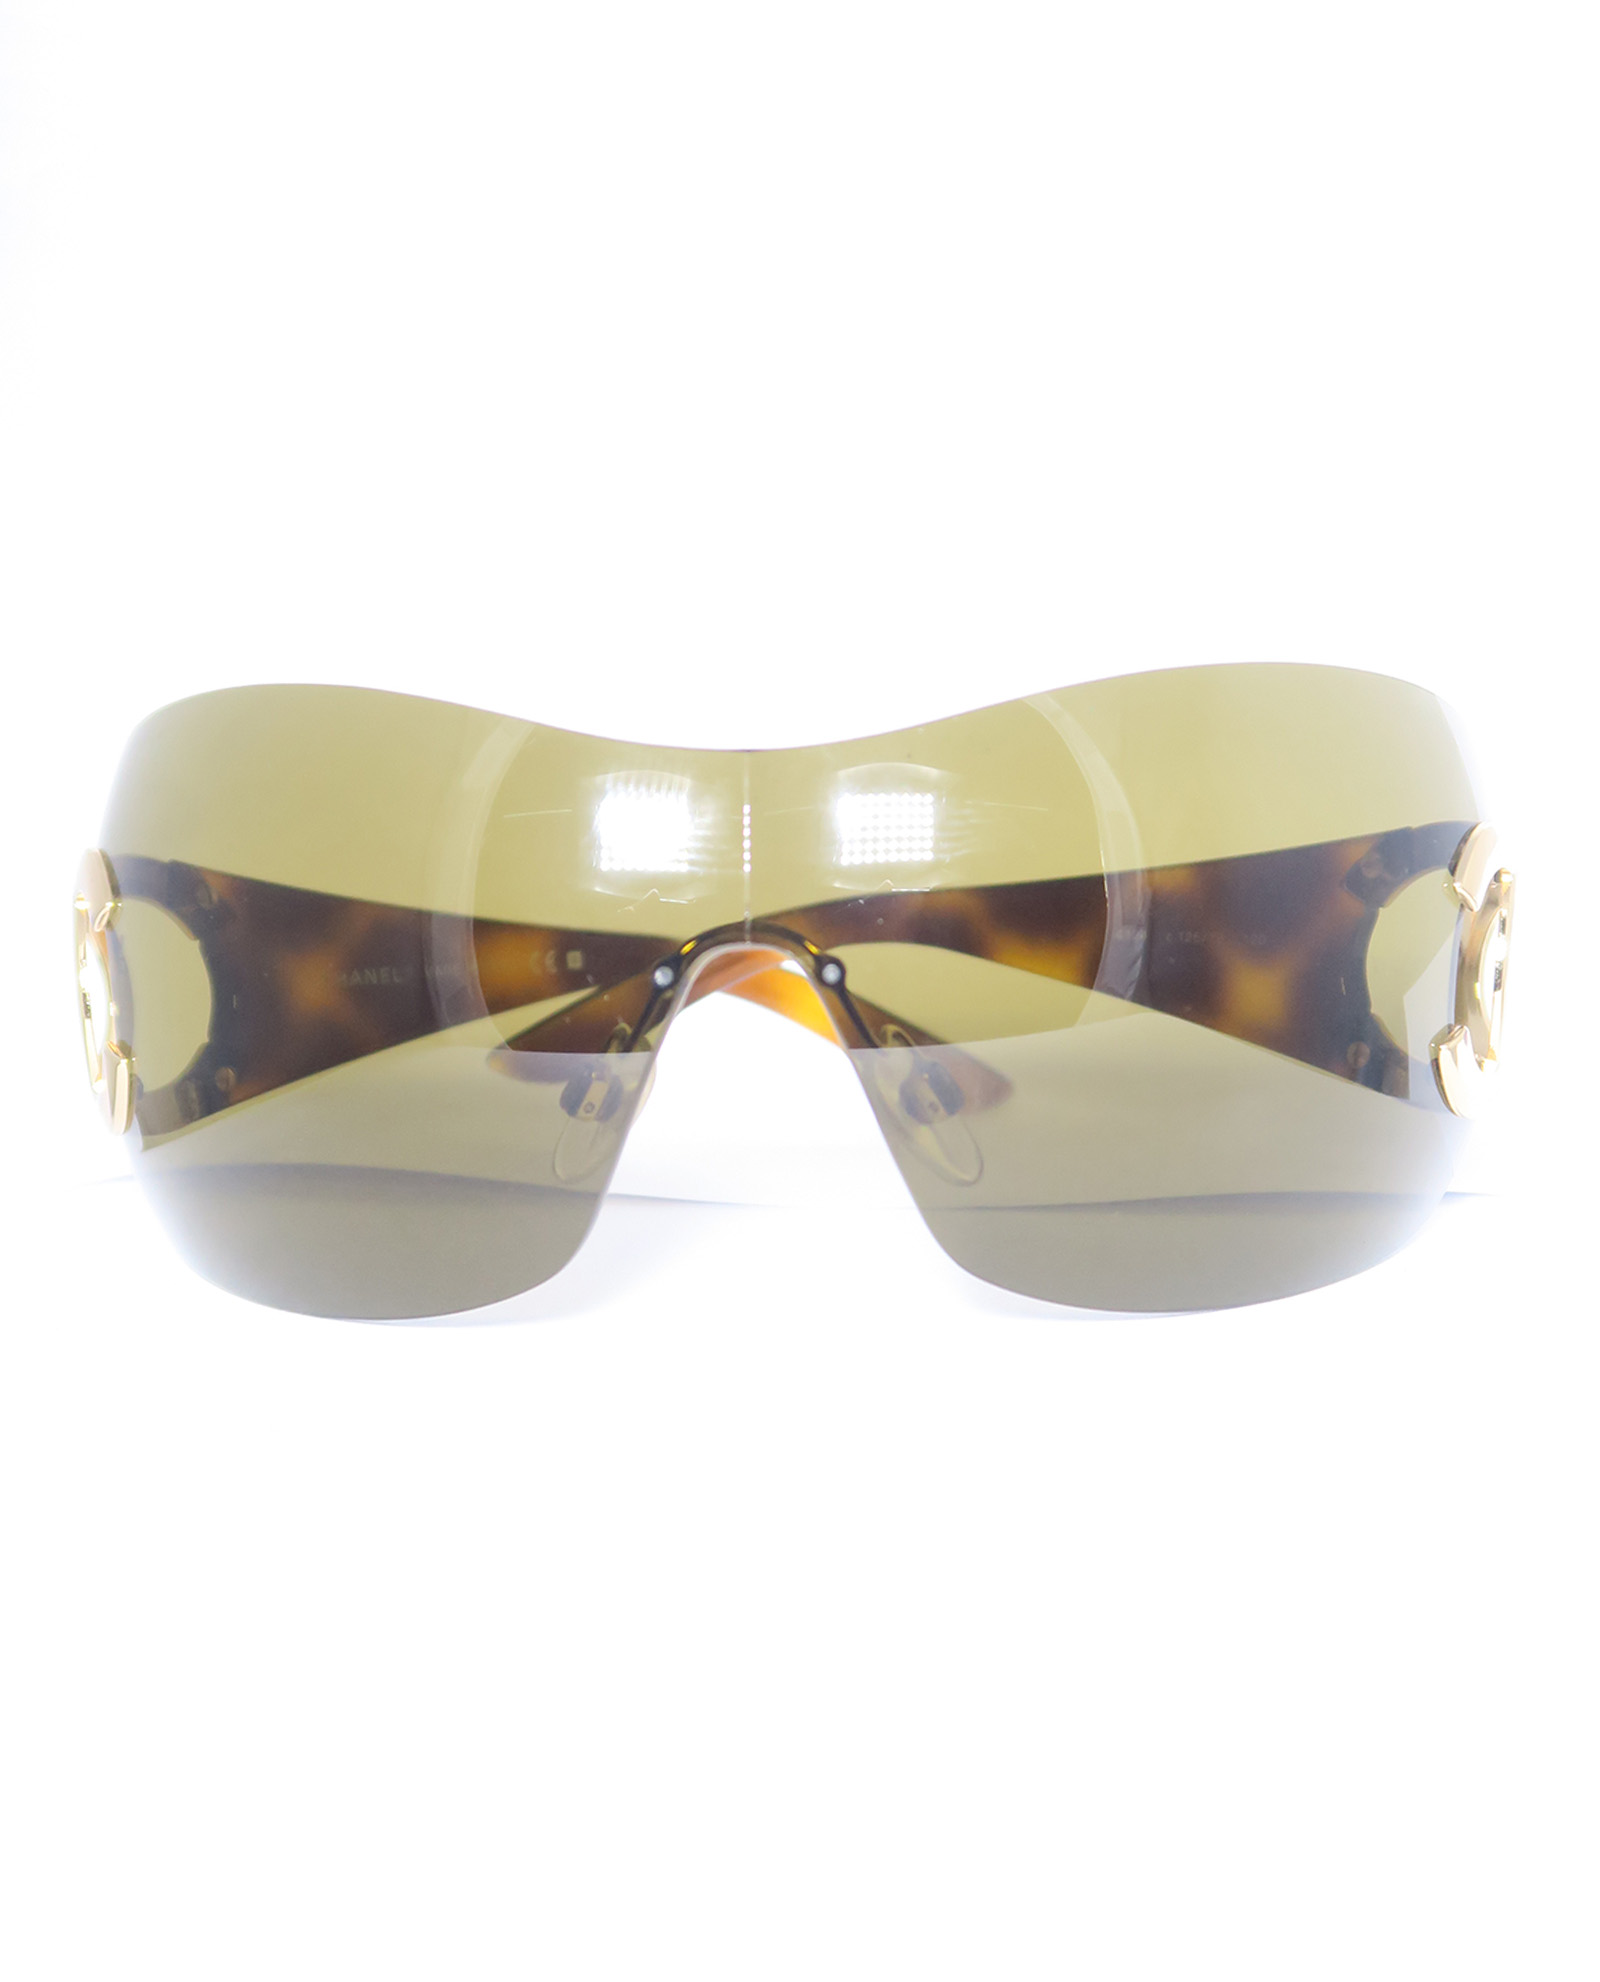 Chanel First Copy Sunglasses DVCH2-4 - Designers Village